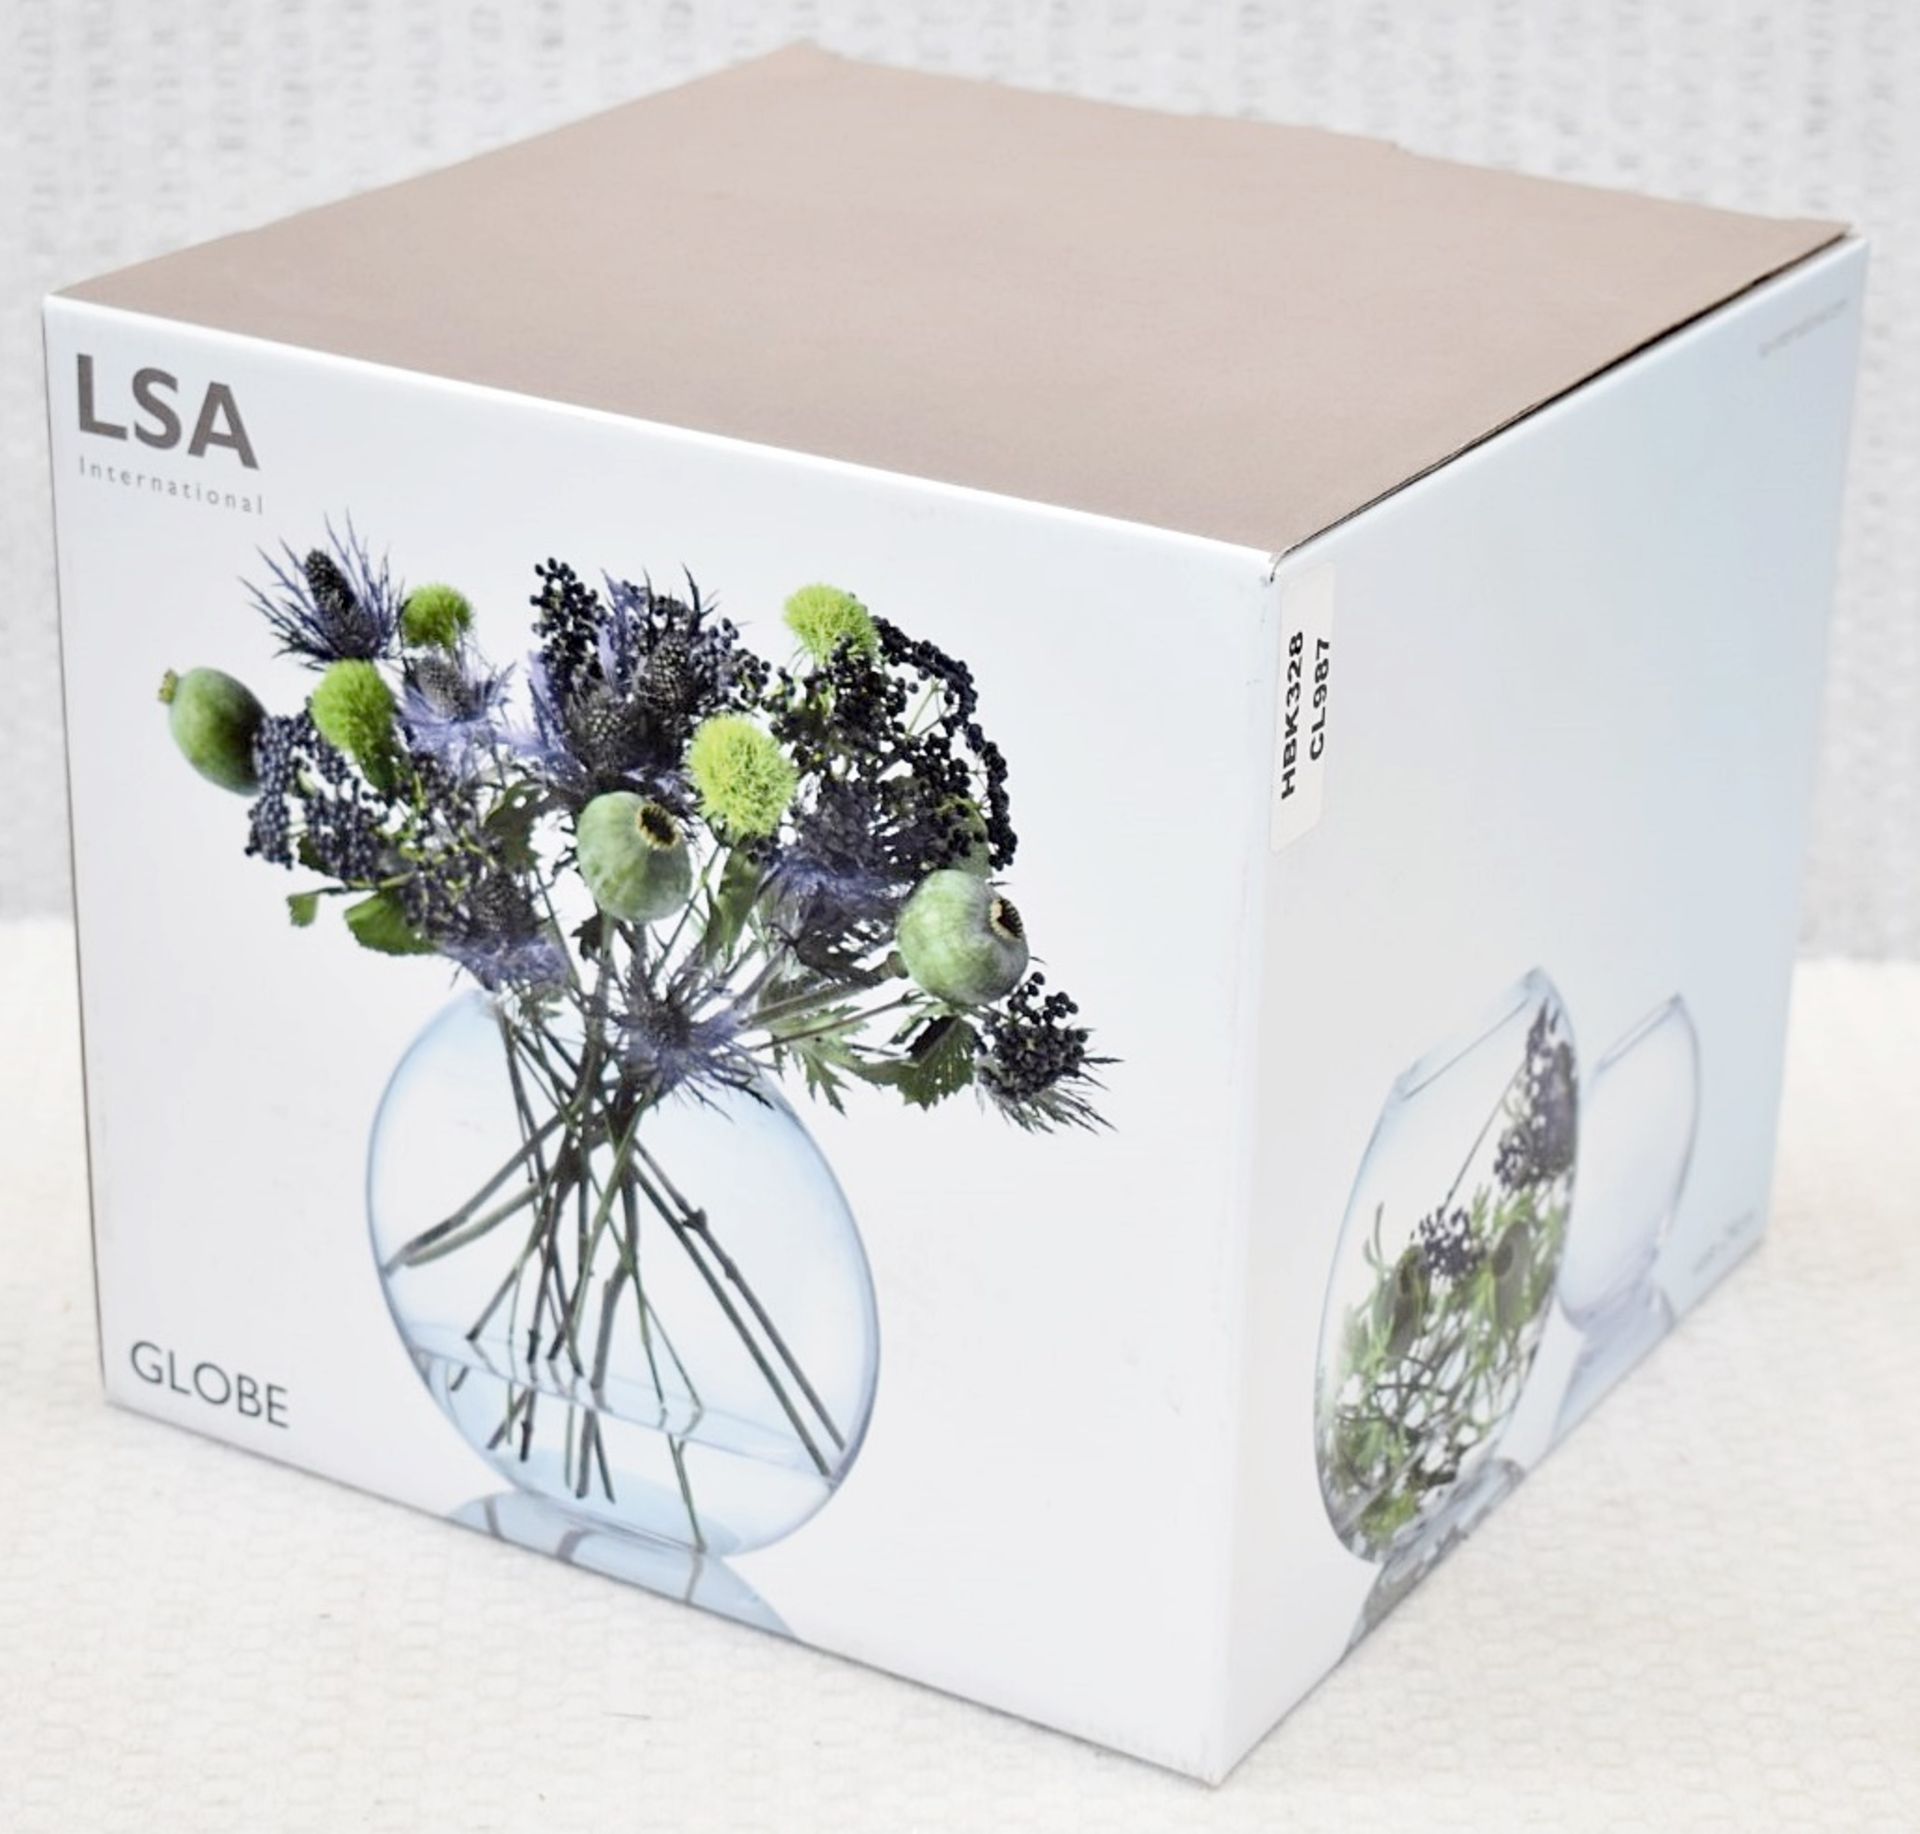 1 x LSA 'Globe' Luxury Mouthblown Glass Spherical Flower Vase, 24cm - Original Price £50.00 - Boxed - Image 2 of 4